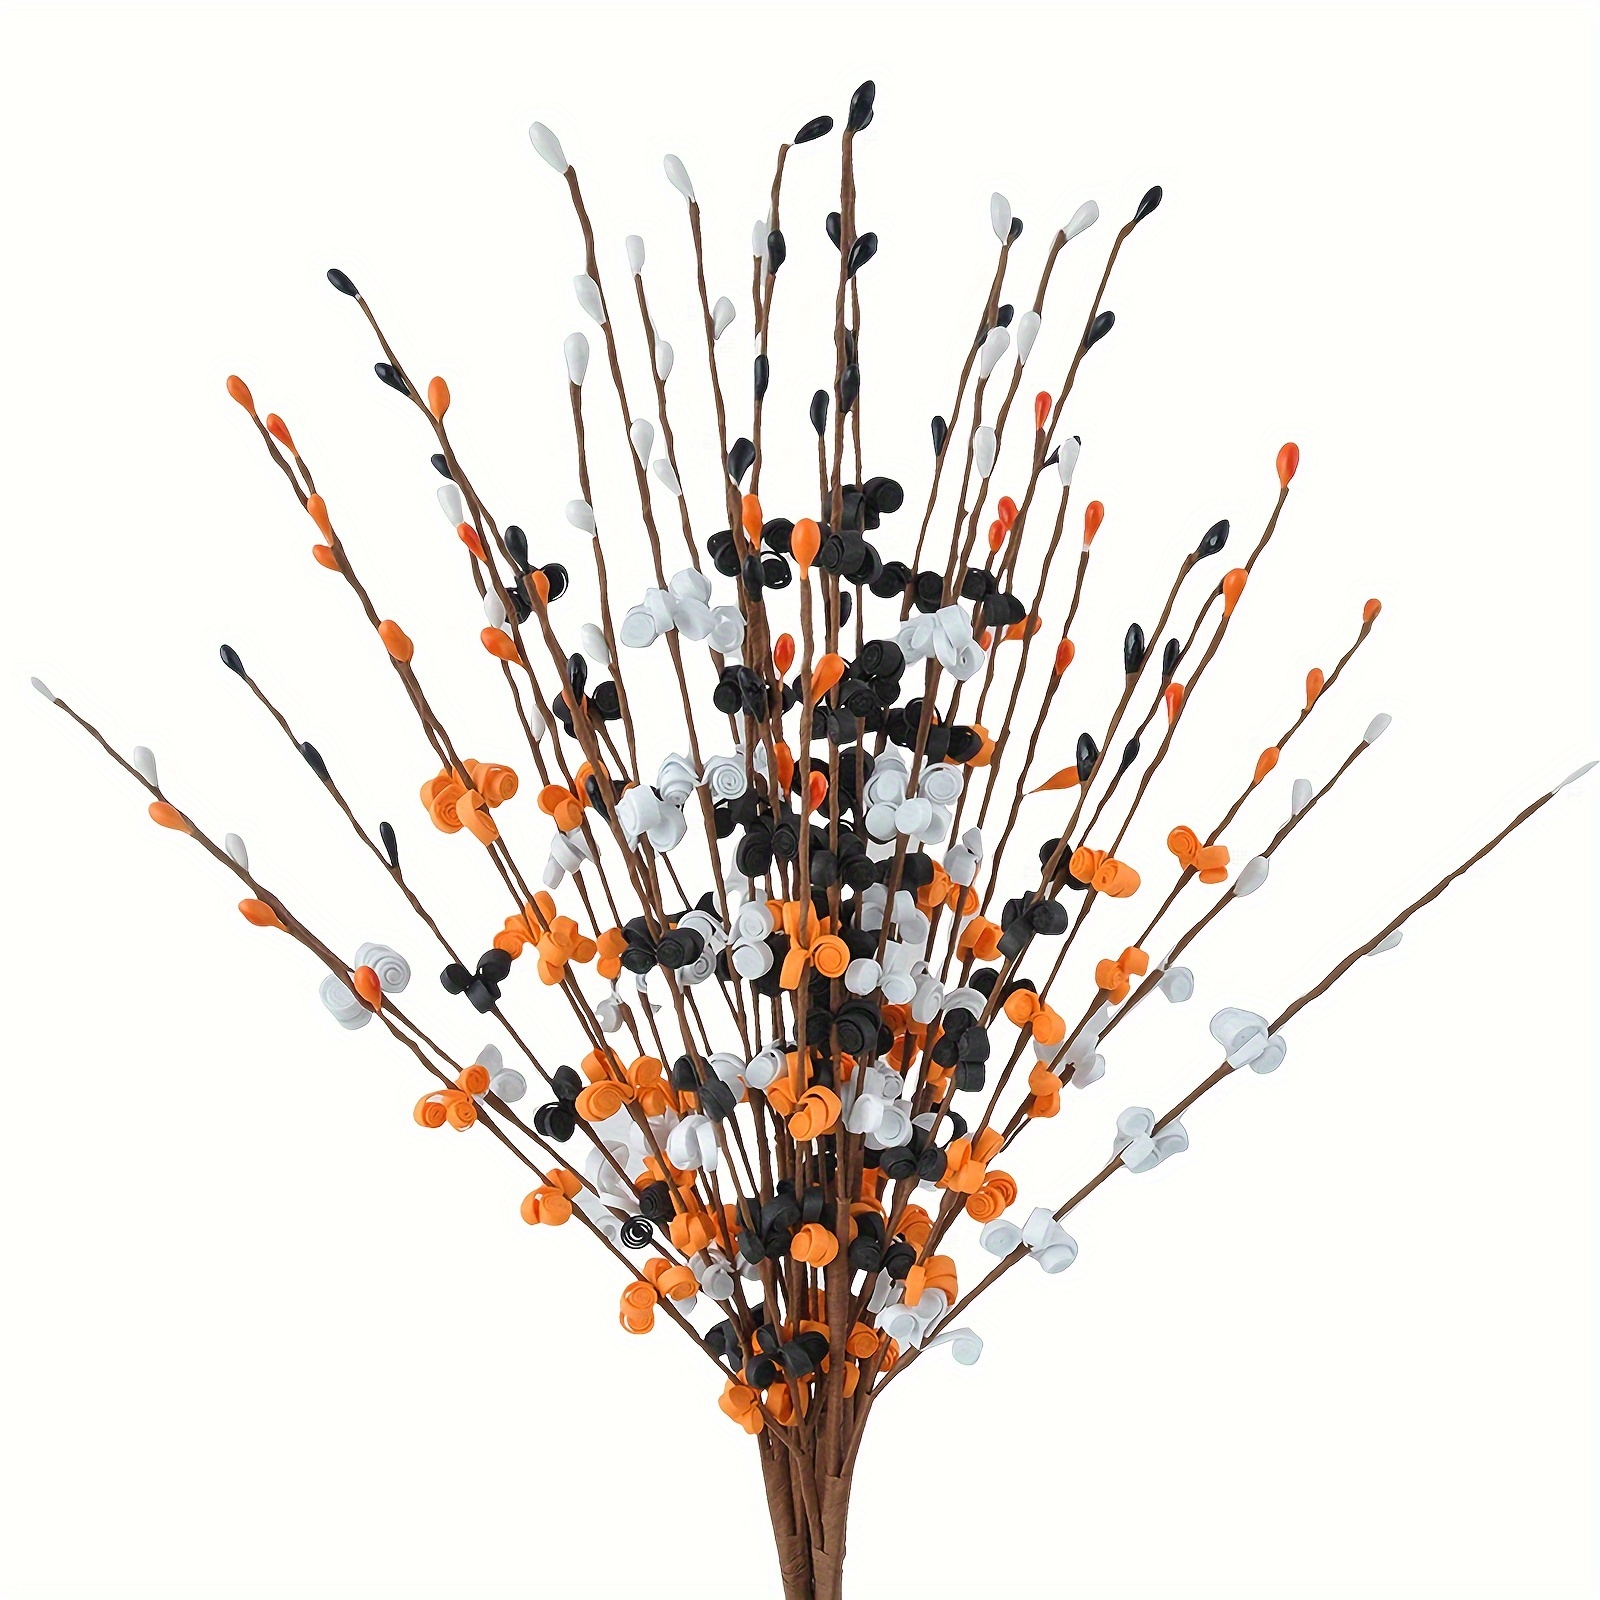 

6-piece 17.32" Artificial Jasmine Stems - Black, Orange & White Halloween Decor For Home Centerpieces